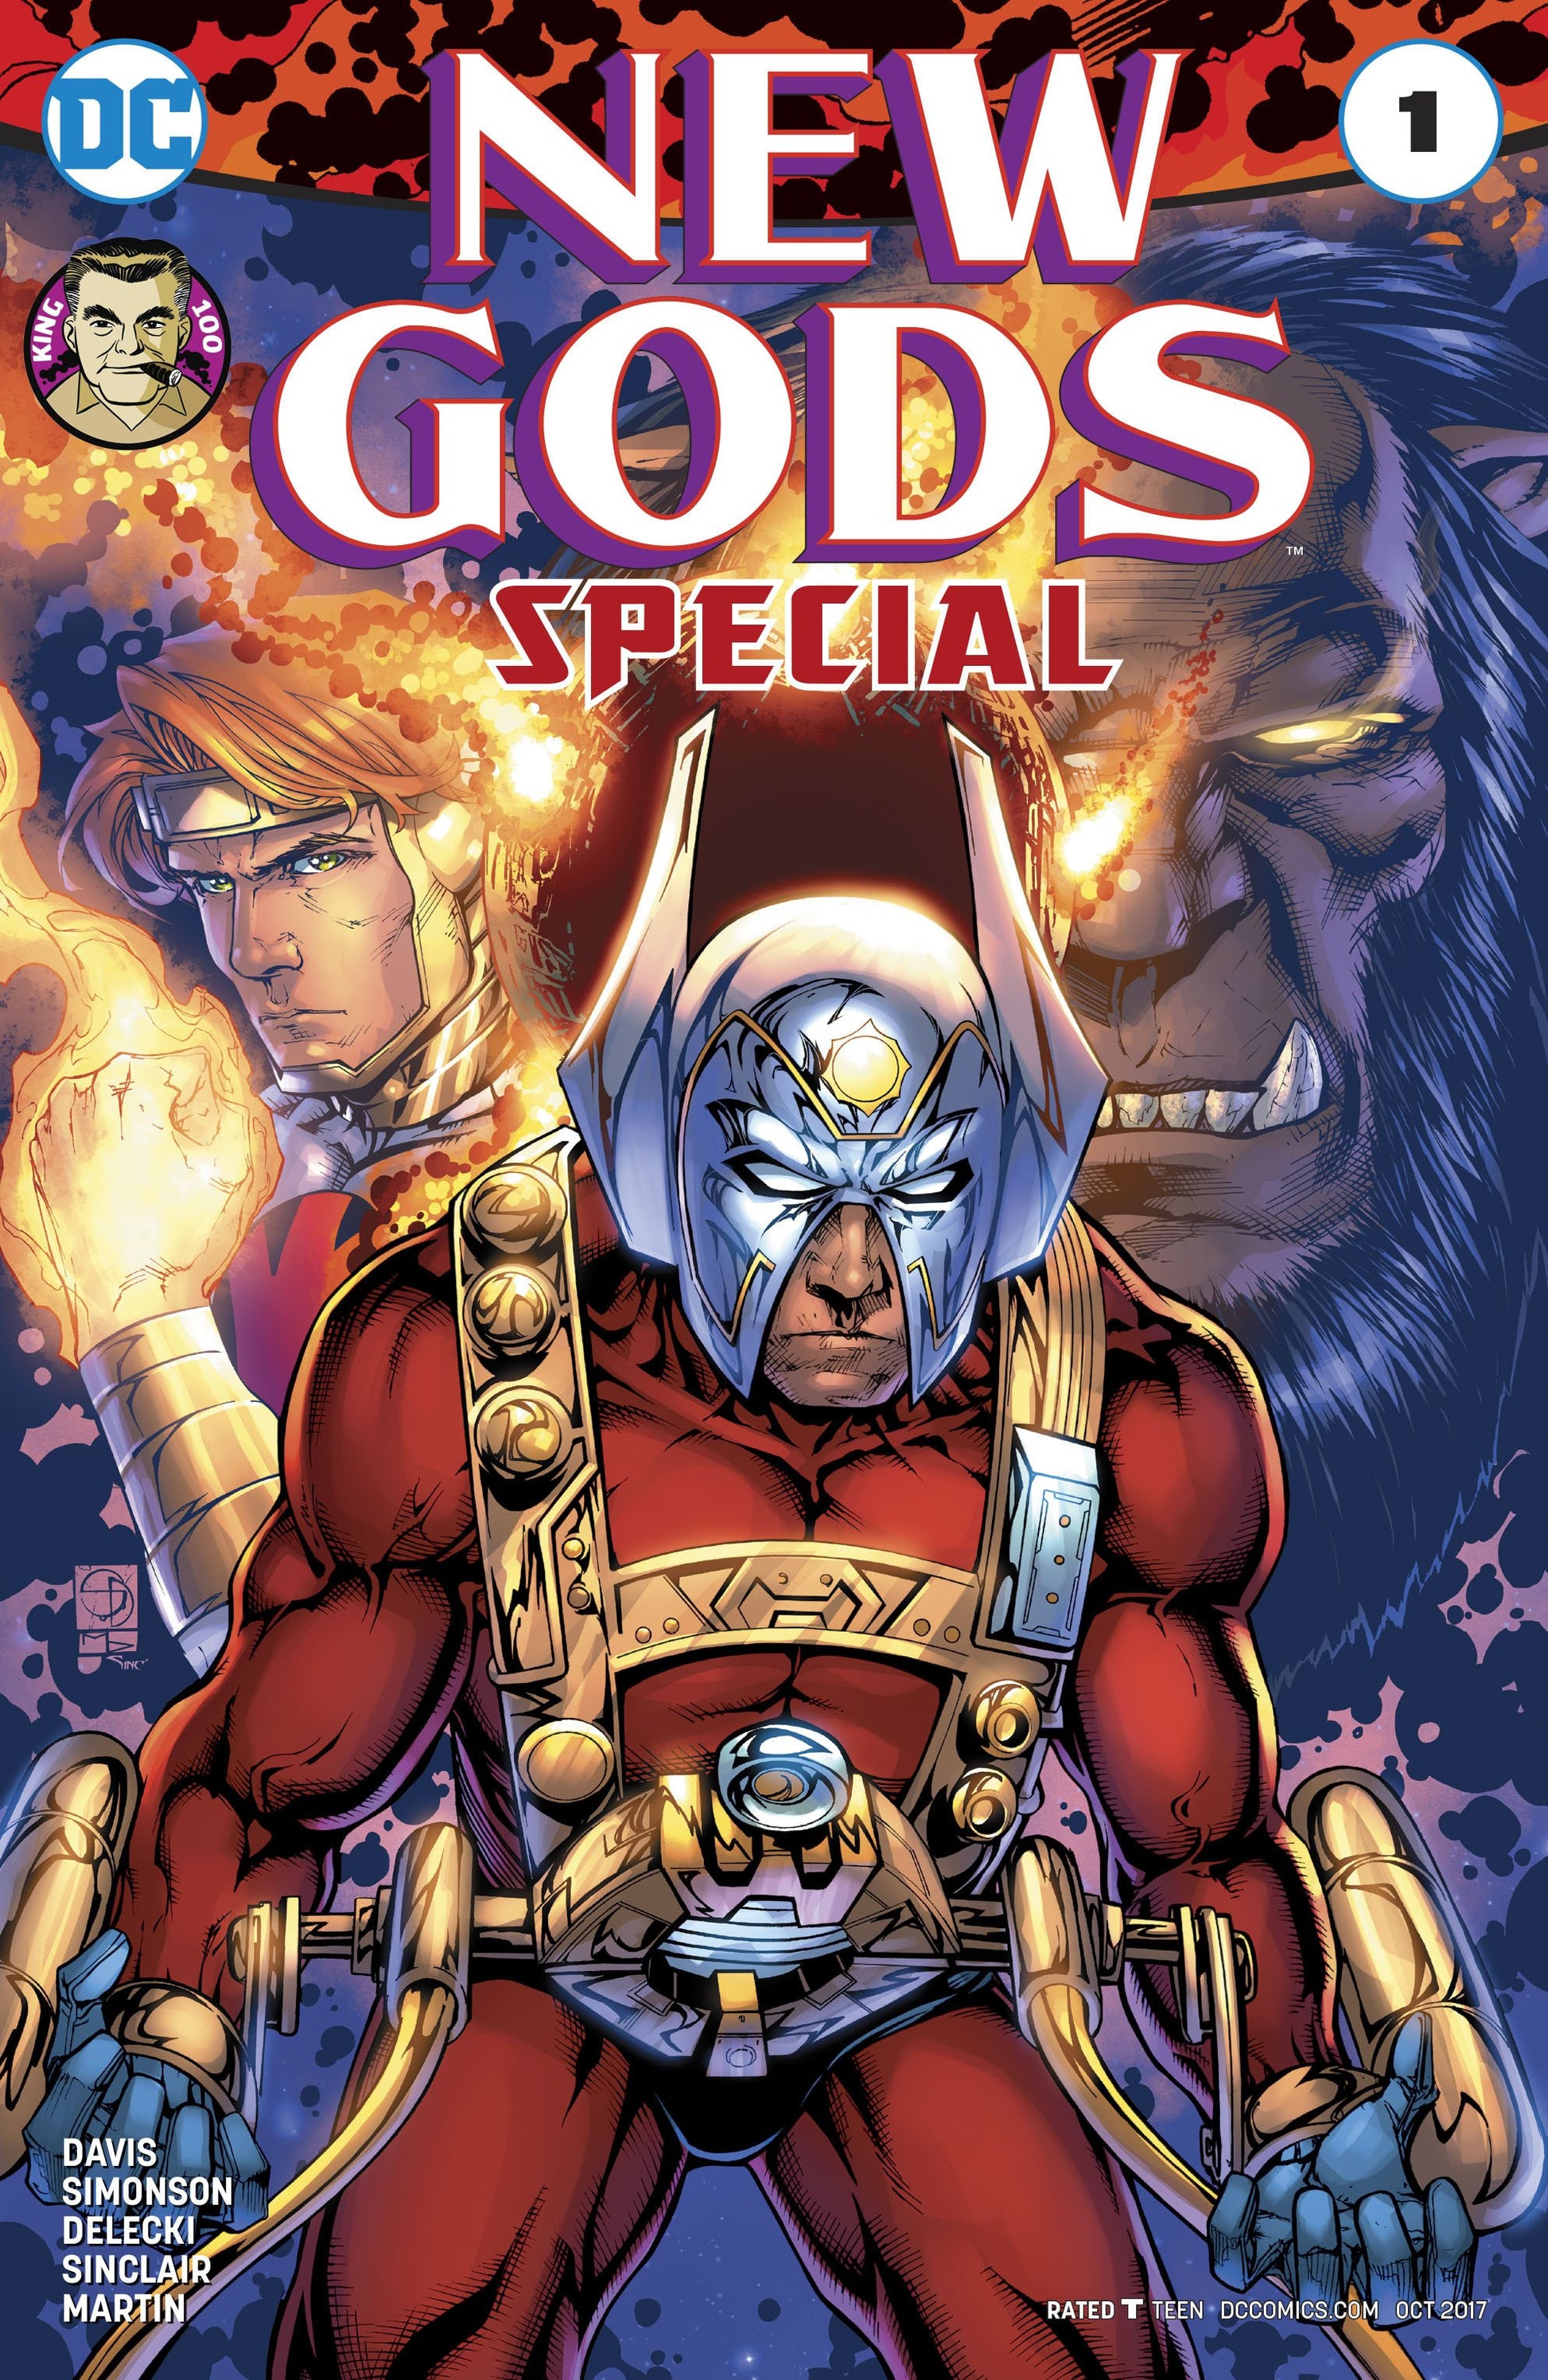 NEW GODS SPECIAL #1 COVER